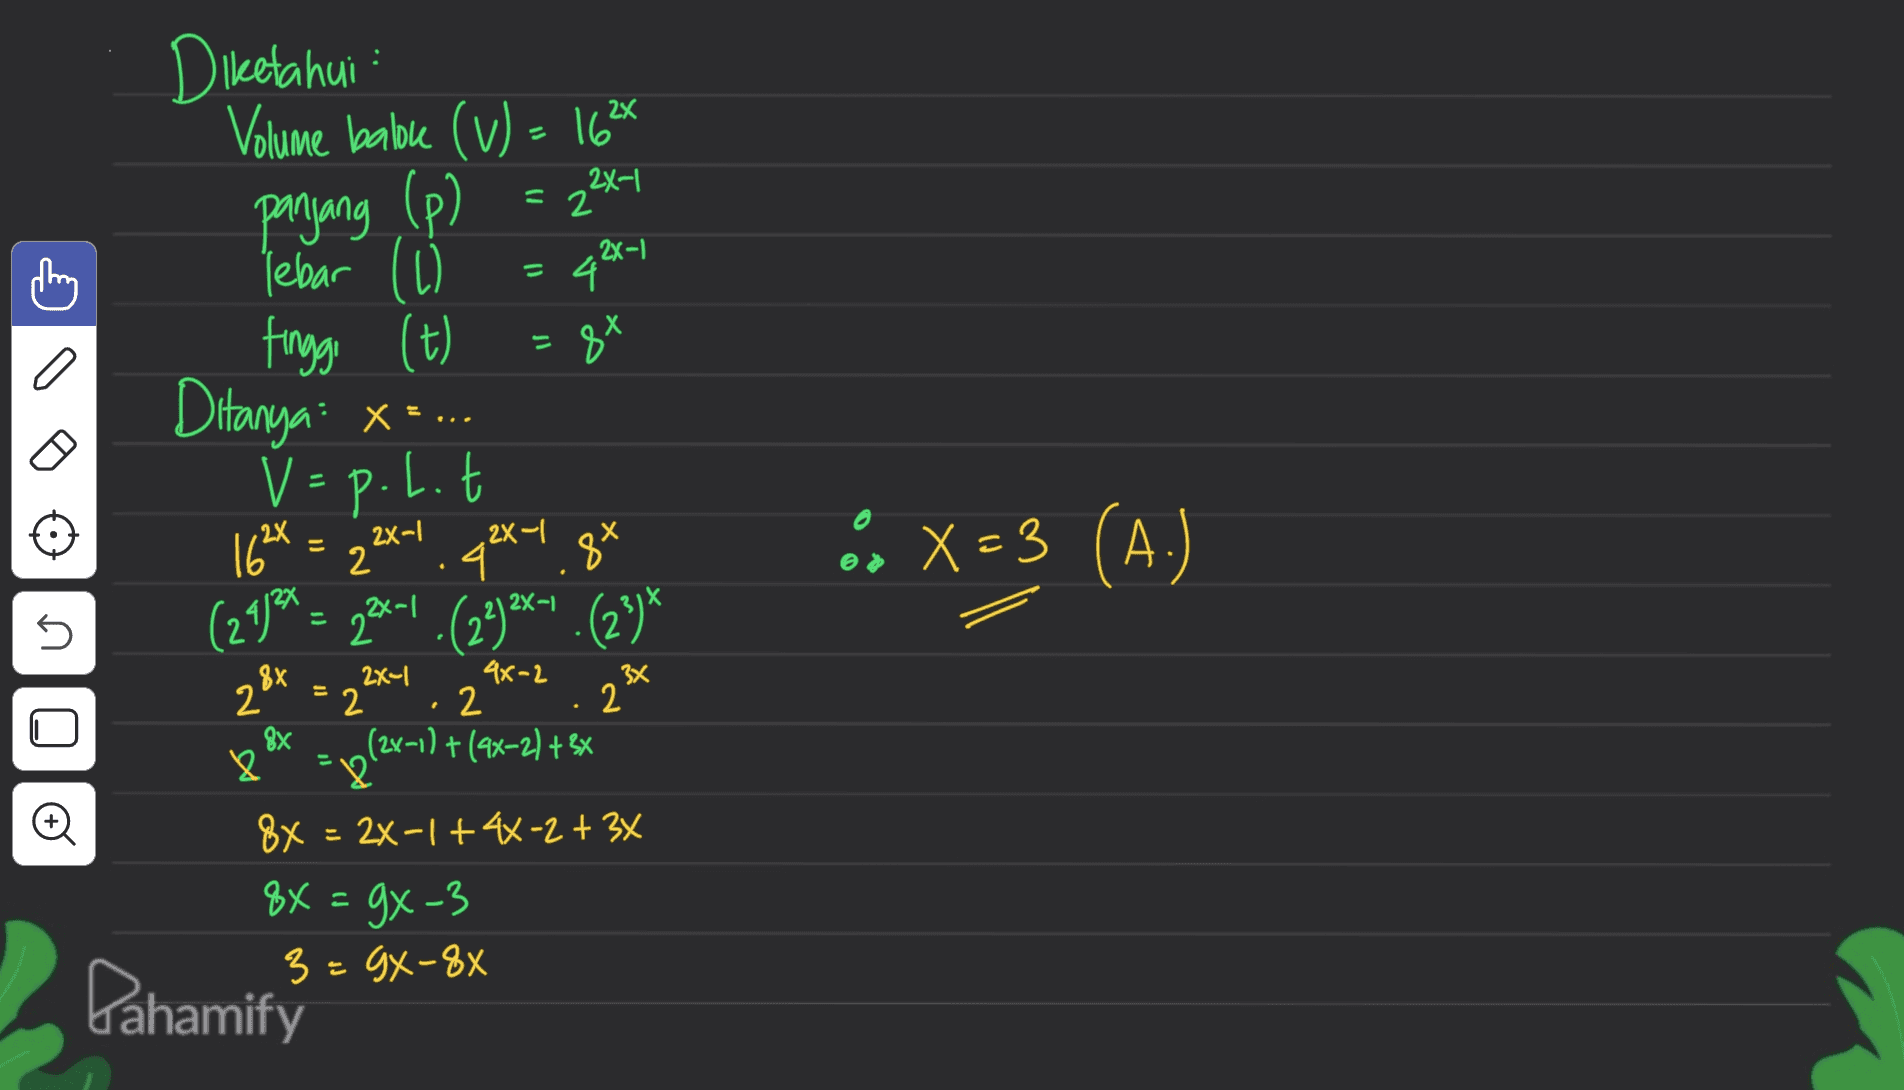 2x =2 panjang (p) .2x-1. = Diketahui Volume balok (v) = 16 22x-1 lebar l 4 tinggi (t) 8* Ditanya: X.. v=p.l.t 42X-1 87 (21)9 = 228-1. (22287. (2º)* Il 162X = 22x- 4 és X =3 (A.) . 5 2x-1 2 2x-1 4x-2 2 2 (2x-1)+(4x-2) + 3x 8x 2' 8x 38 2 O 8x = 2x-1 + 4% -2 + 3x 8&=gX-3 3=9X-8% Dahamify 